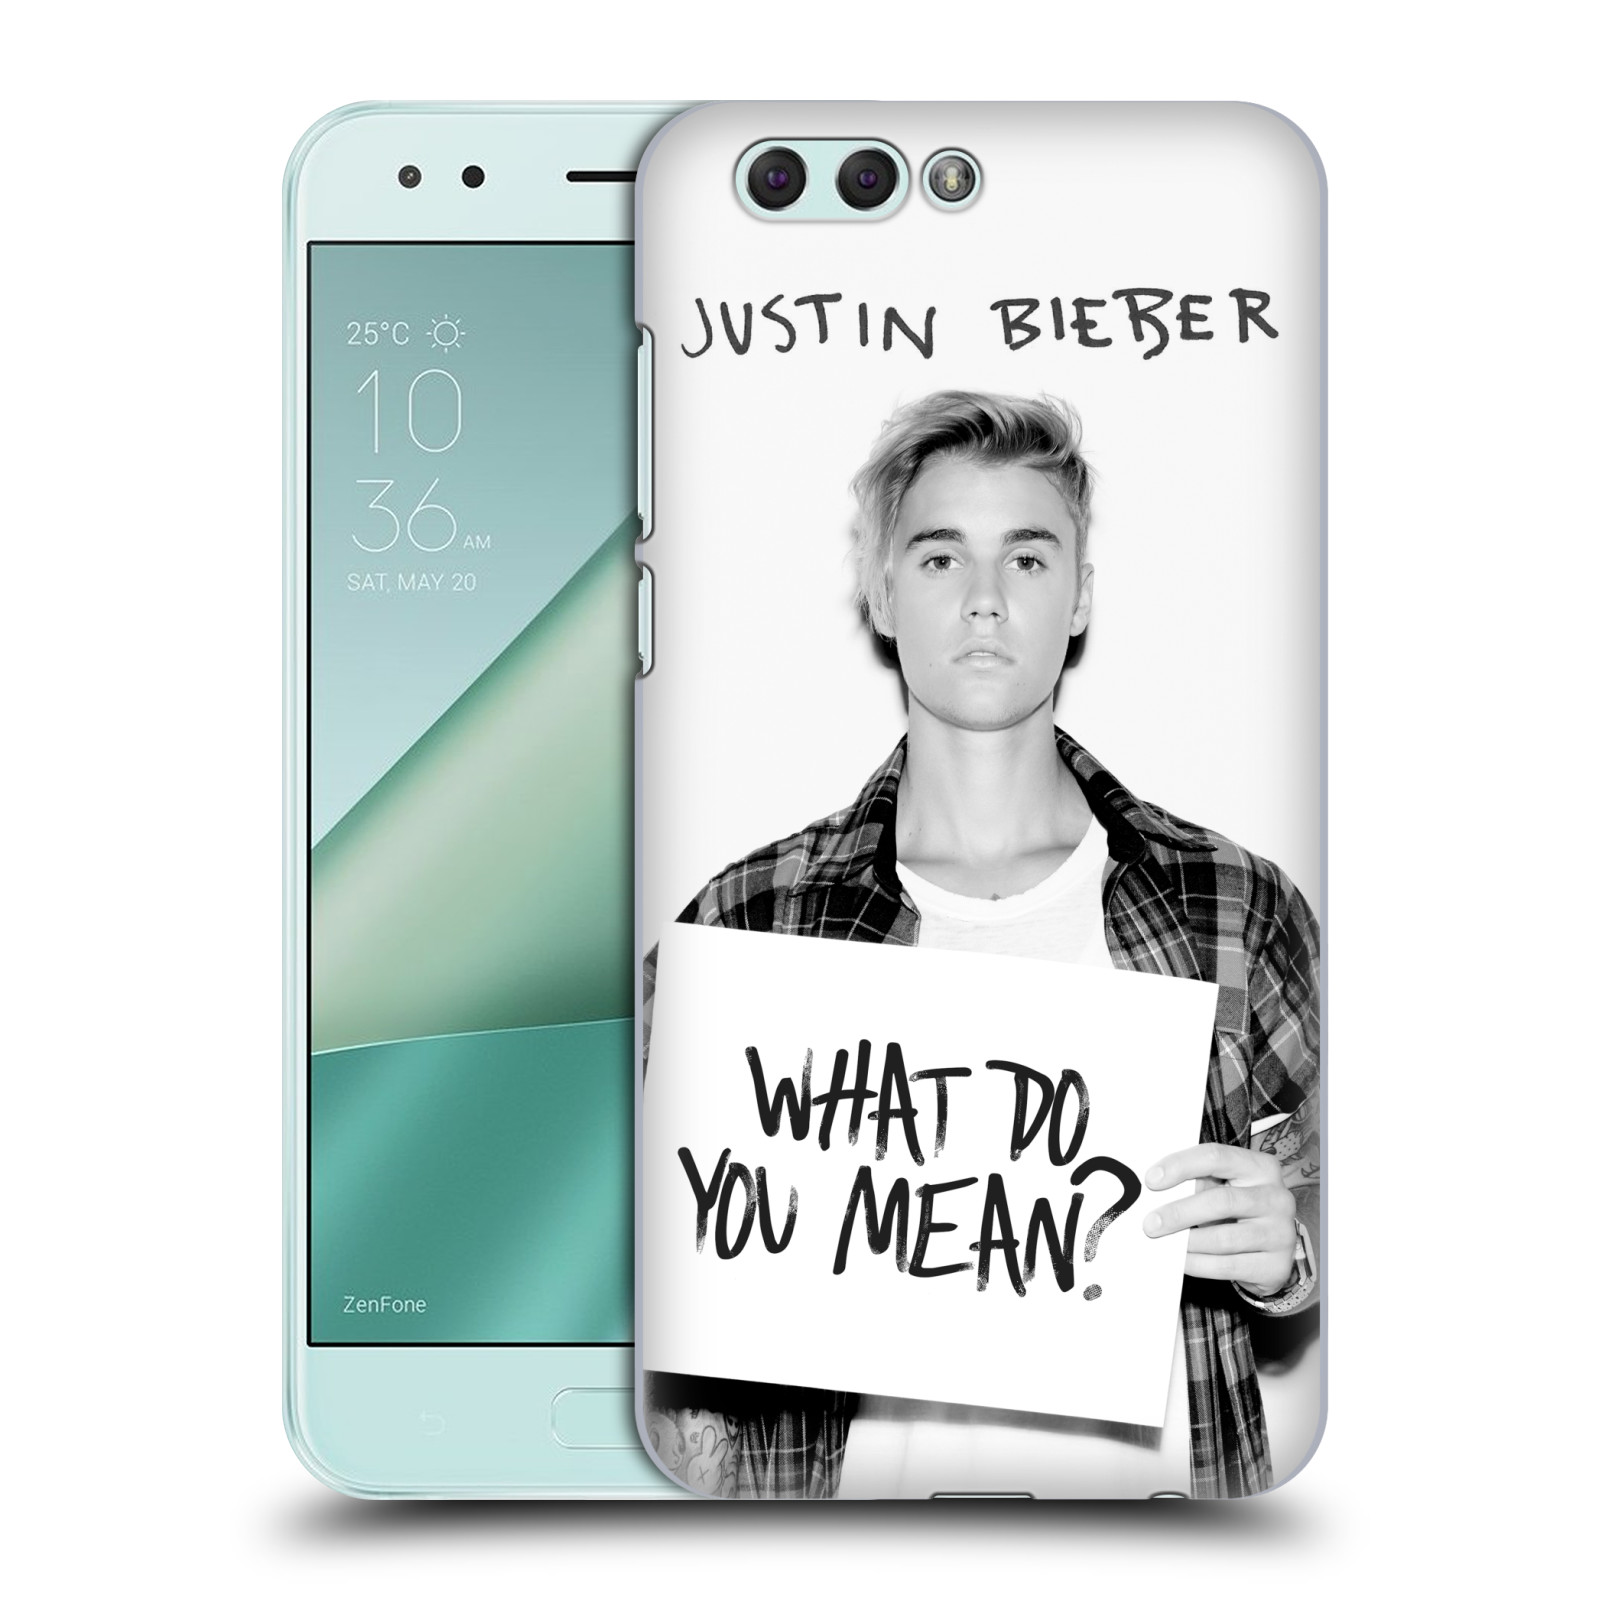 HEAD CASE plastový obal na mobil Asus Zenfone 4 ZE554KL Justin Bieber foto Purpose What do you mean